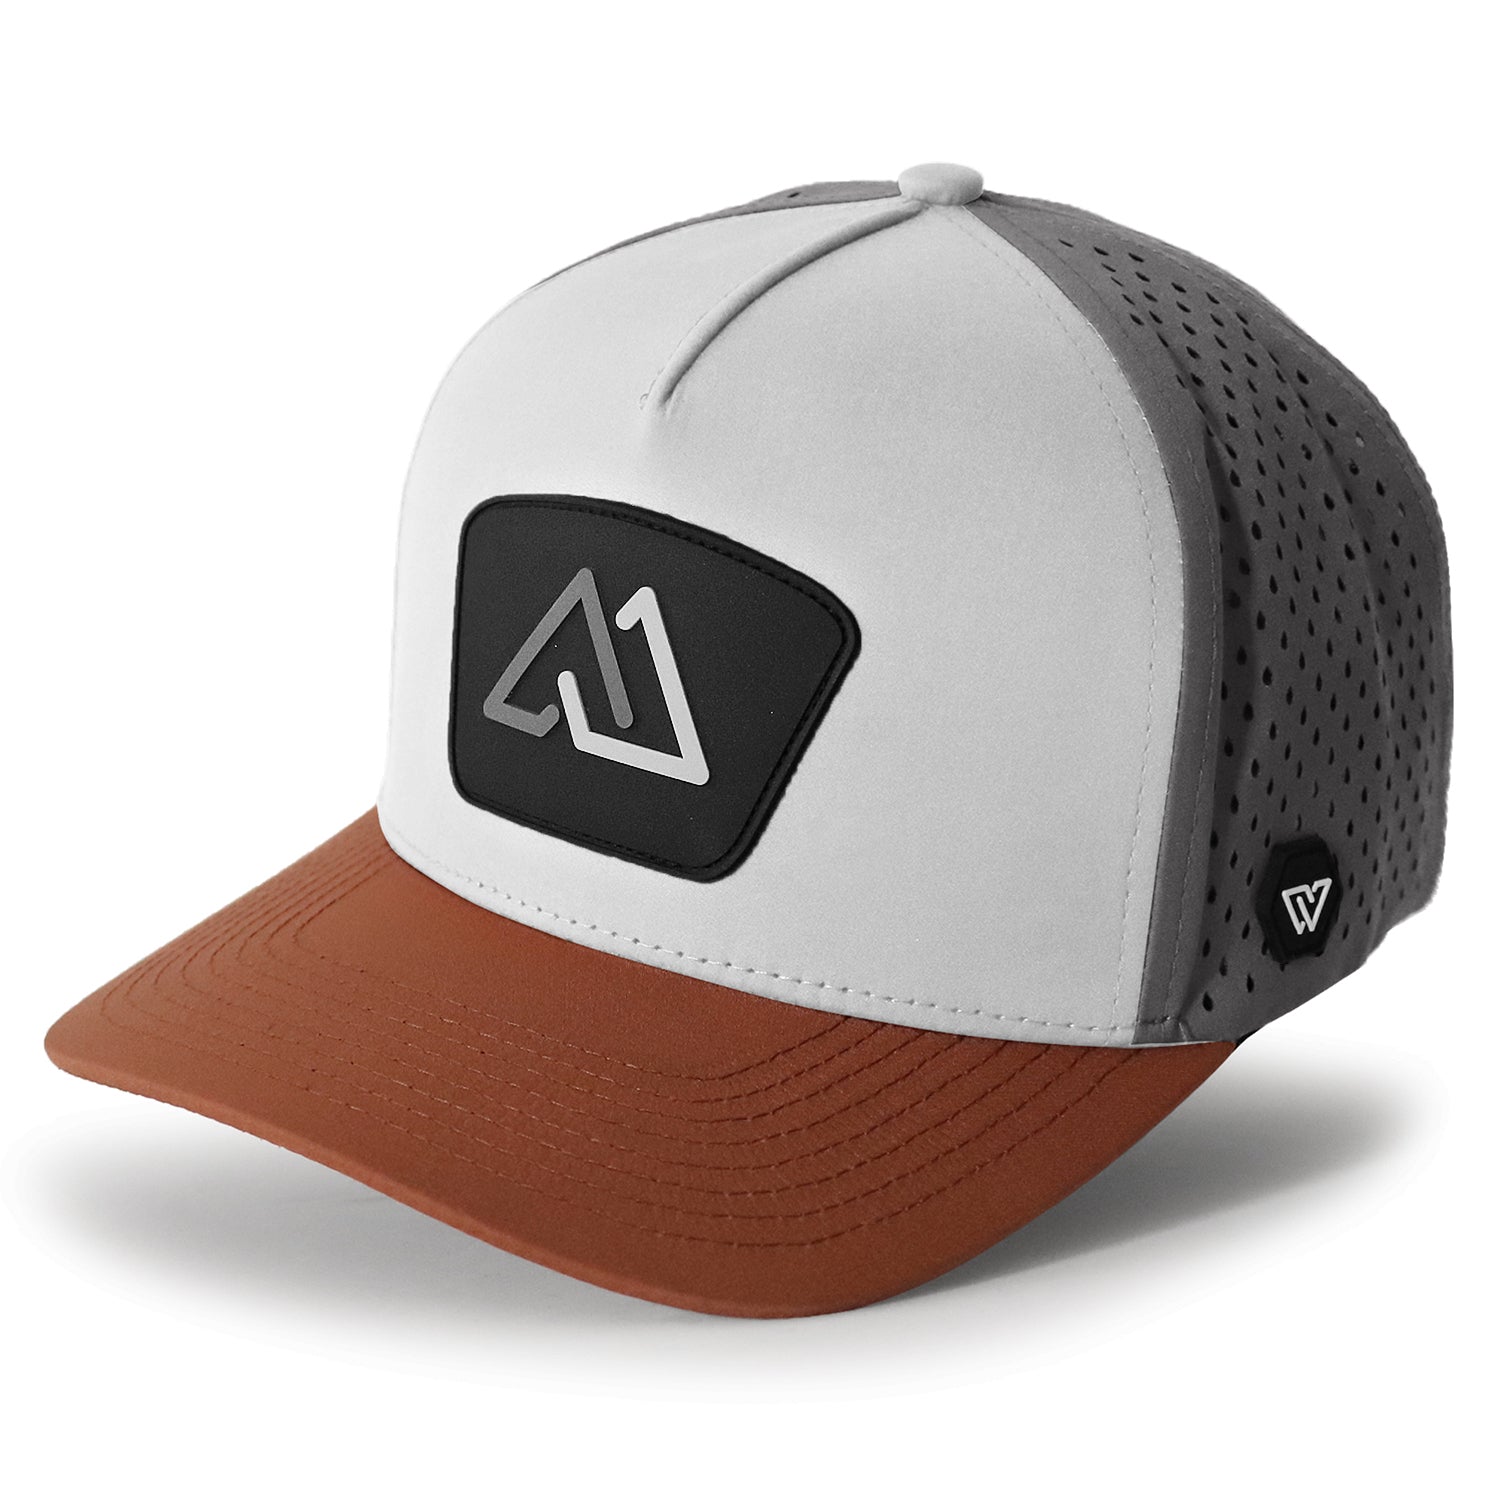 HDE Trucker Hat - Performance Outdoor Snapback Adventure Hats for Men  Boreal Bear 